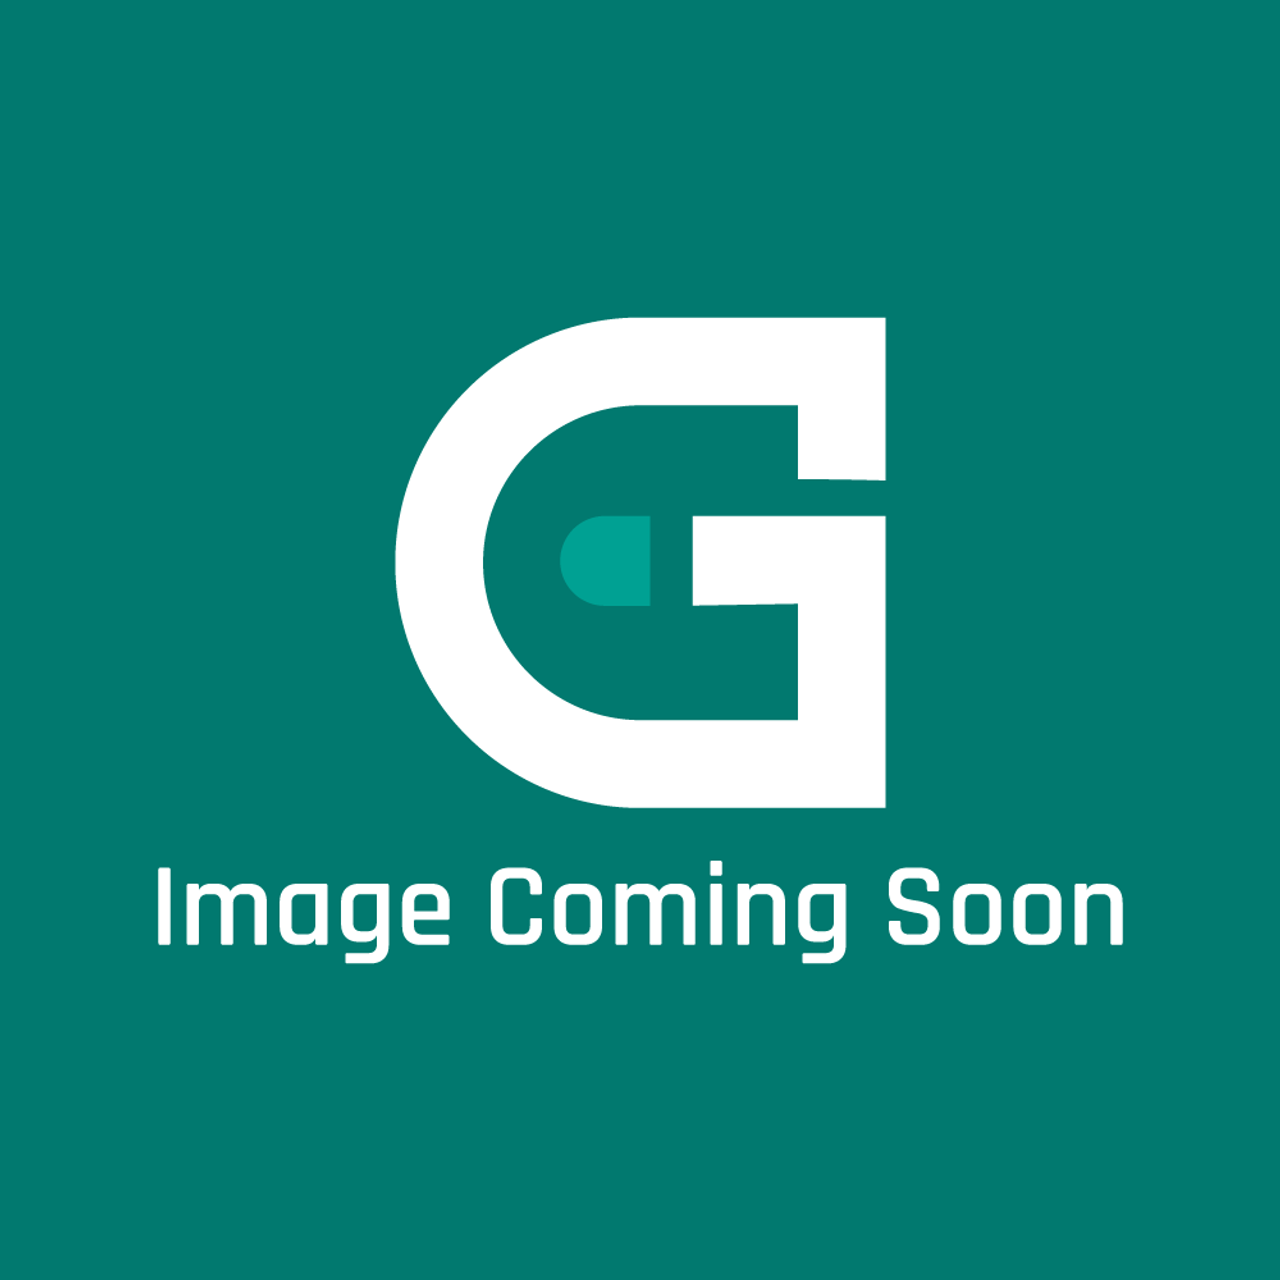 AGA Marvel FS4M997240 - F00717Bxx - Air Slide Assy - Image Coming Soon!